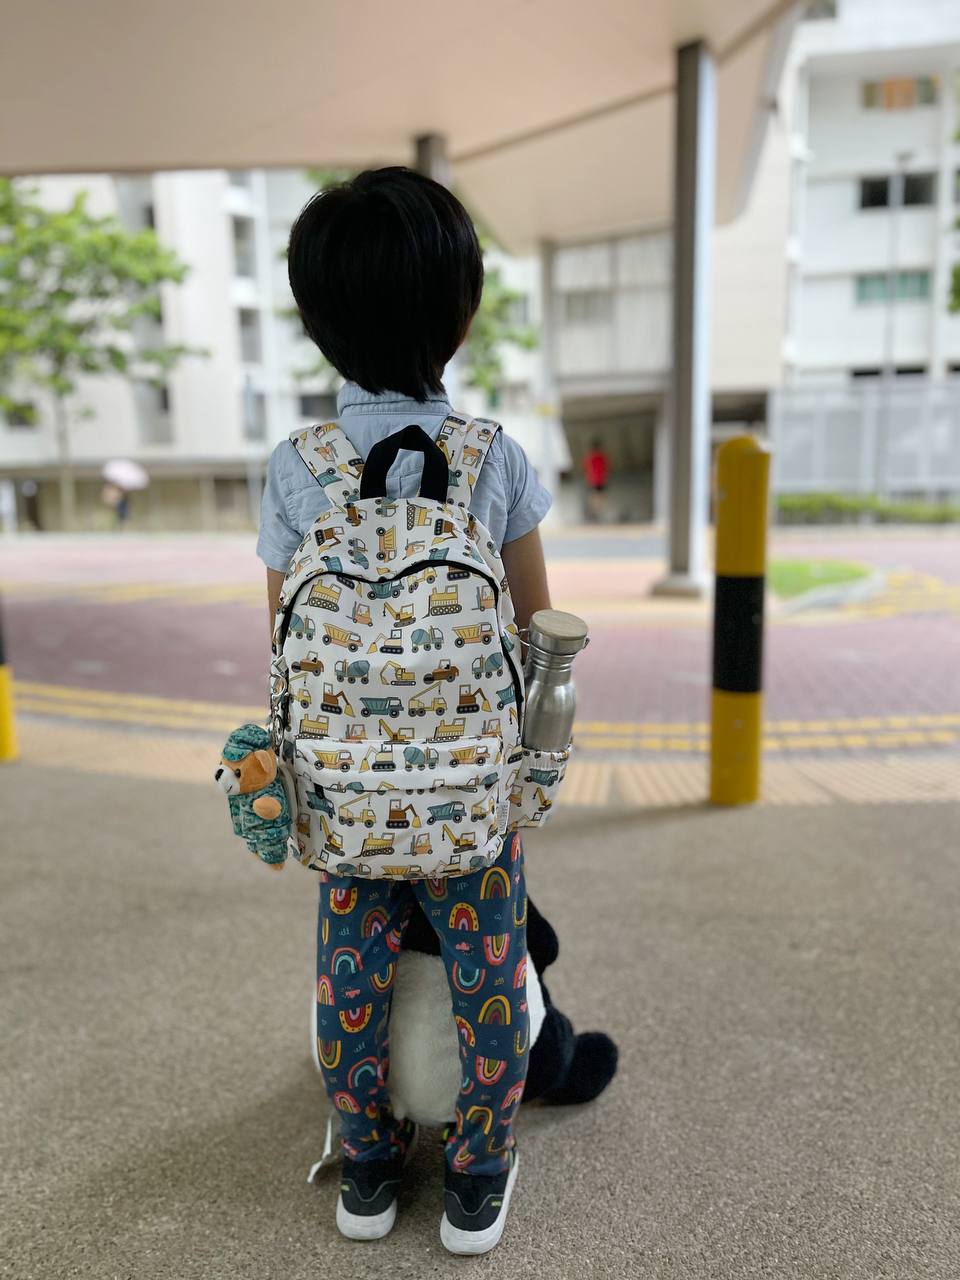 Toddler Backpack - Dinoworld